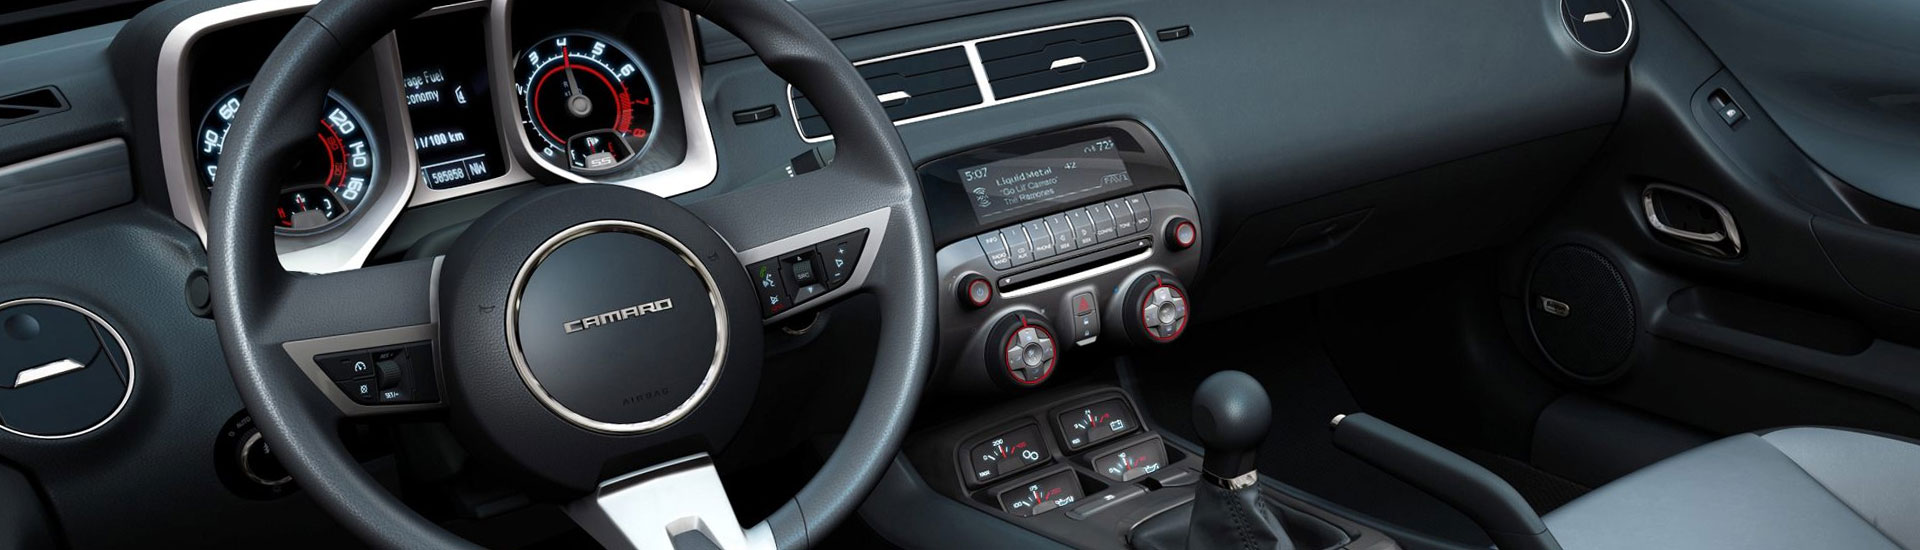 https://www.rvinyl.com/images/2013-Chevrolet-Camaro-Dash-Kits.jpg